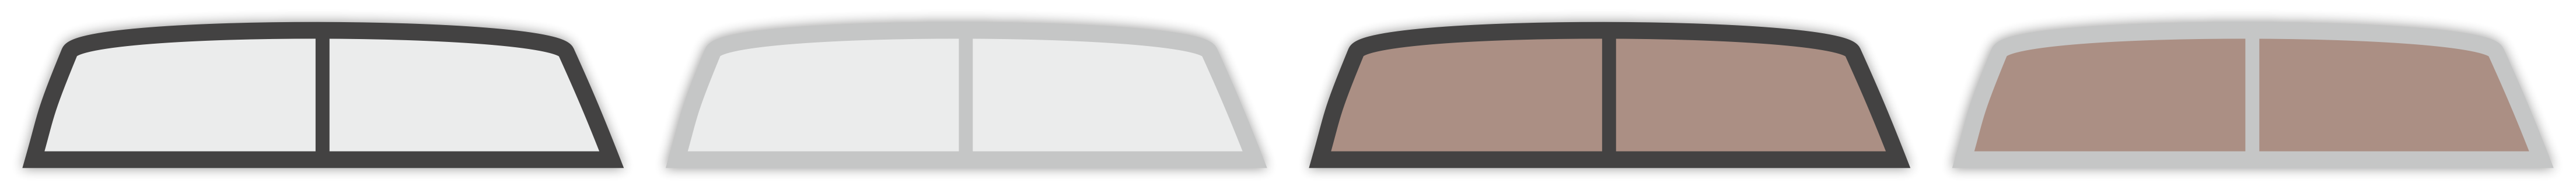 Barvy polykarbonátu (čirý, kouřový bronz) a barva kontrukce (antracit, elox)